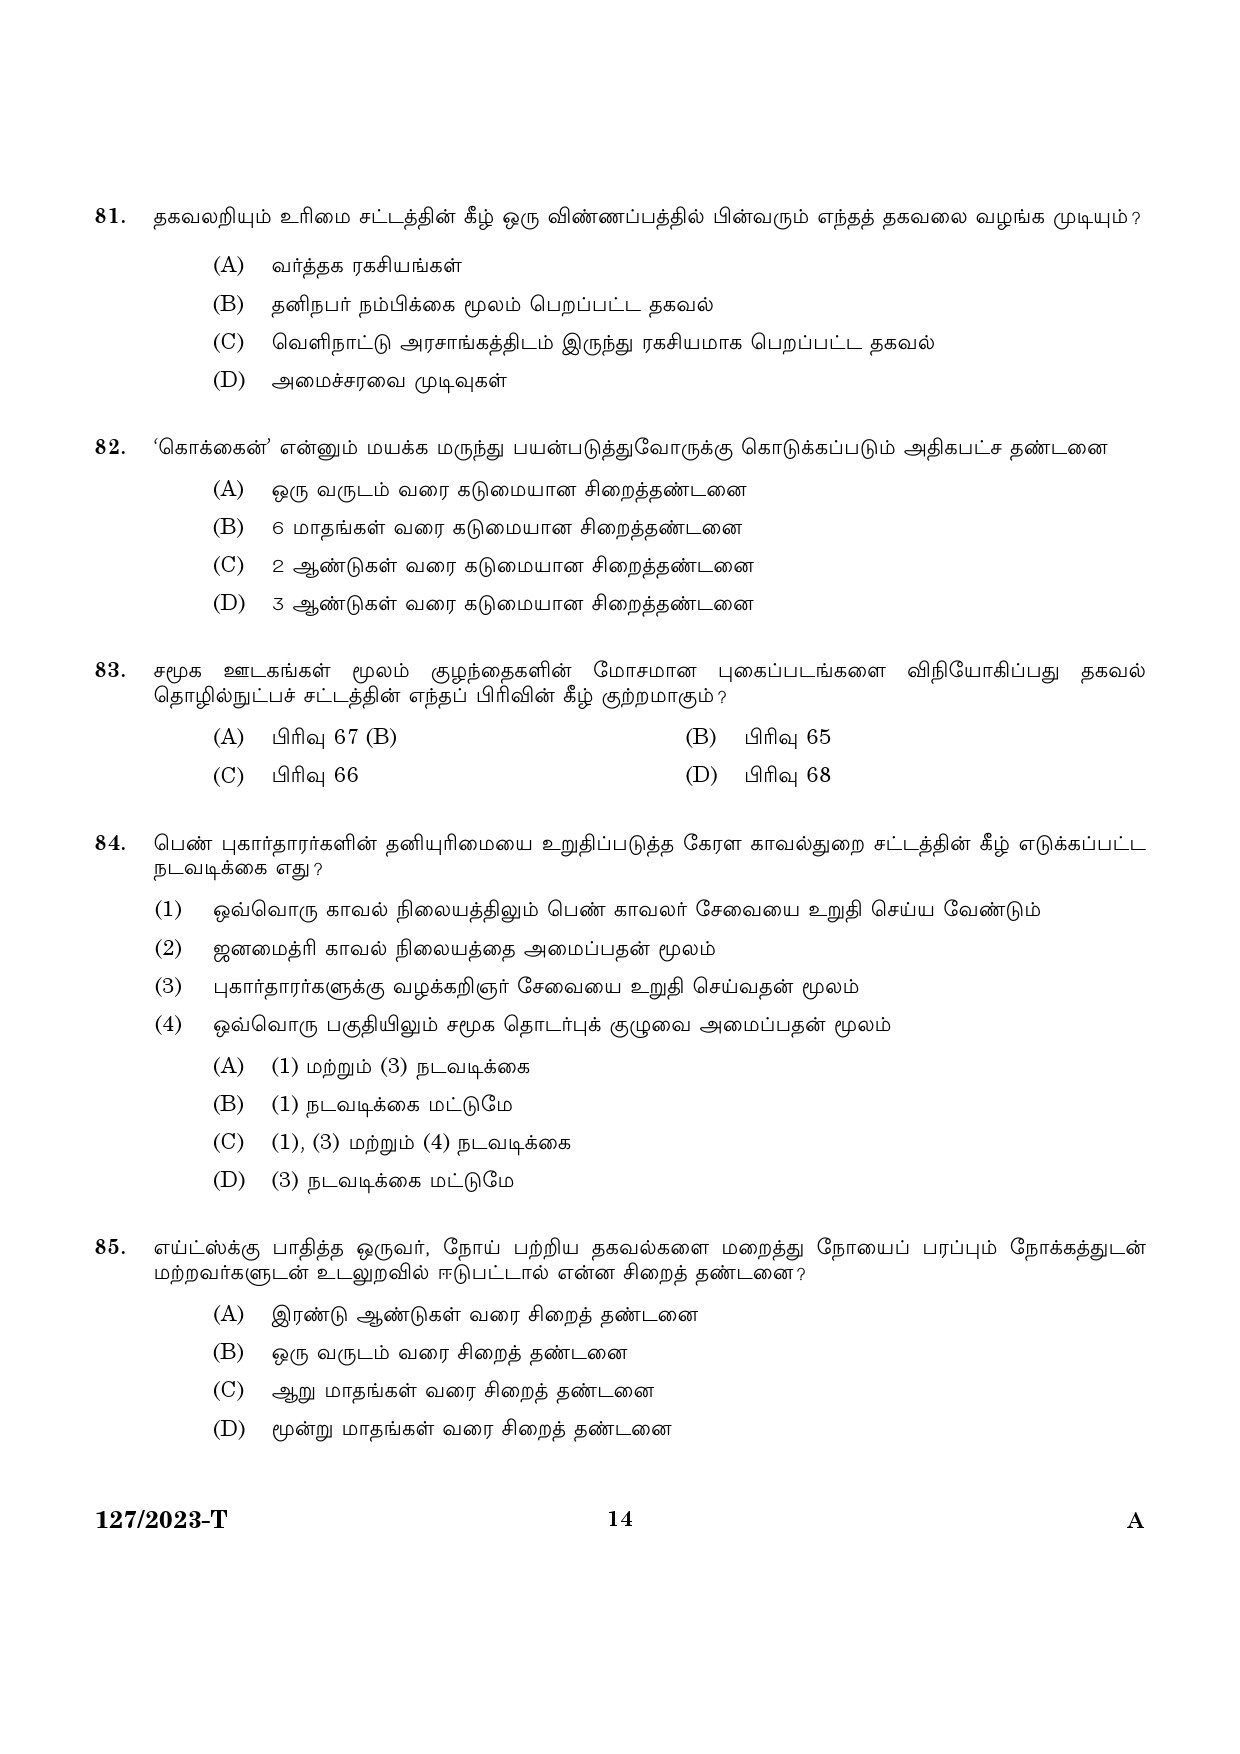 KPSC Police Constable Armed Police Battalion Tamil Exam 2023 Code 1272023 T 12